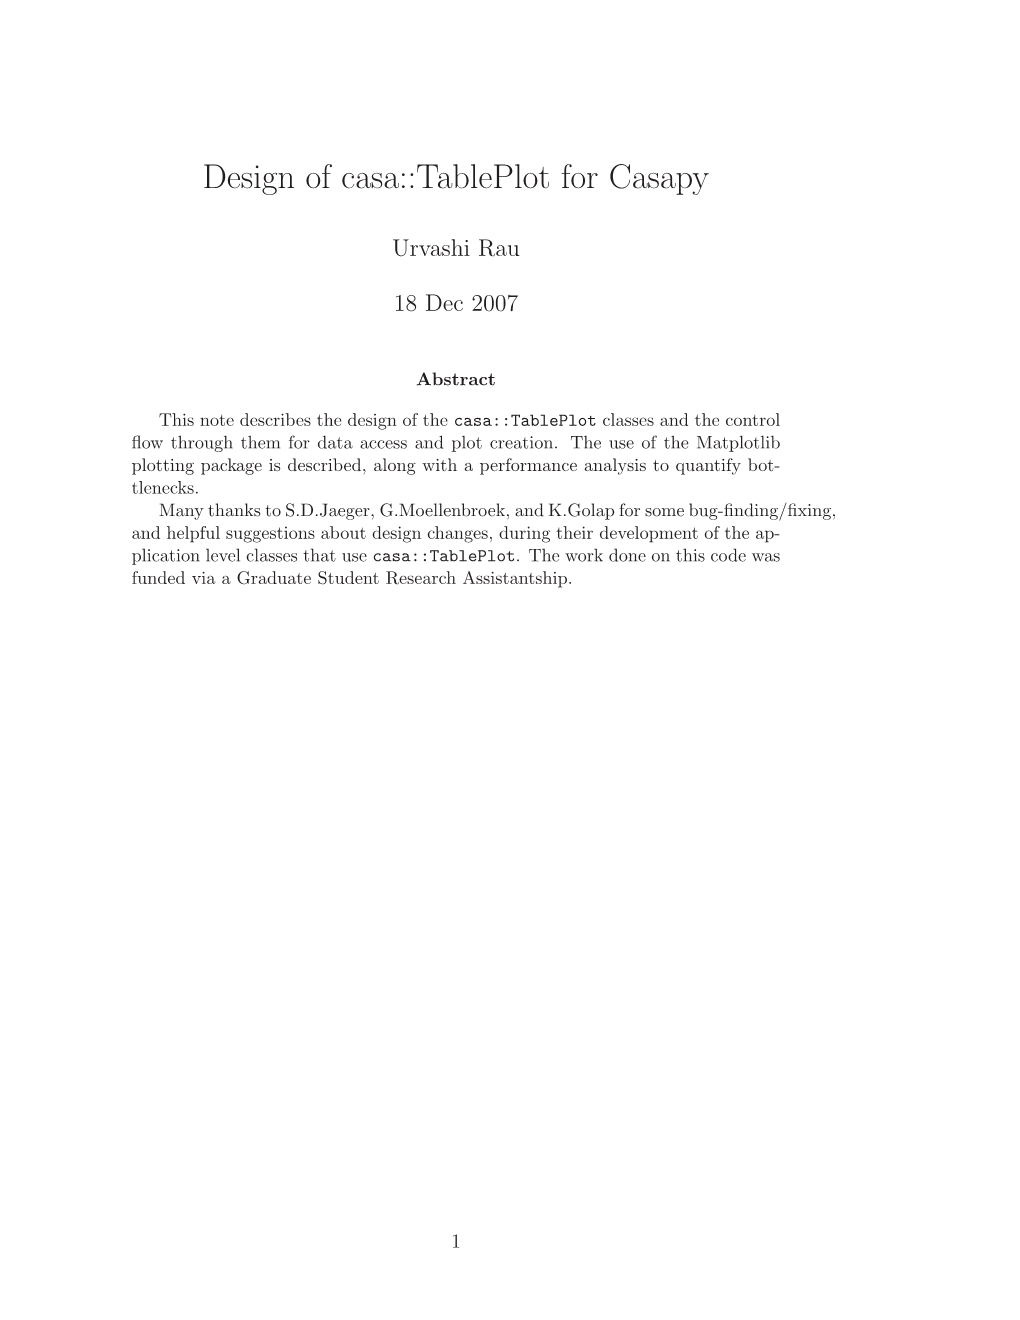 Design of Casa::Tableplot for Casapy